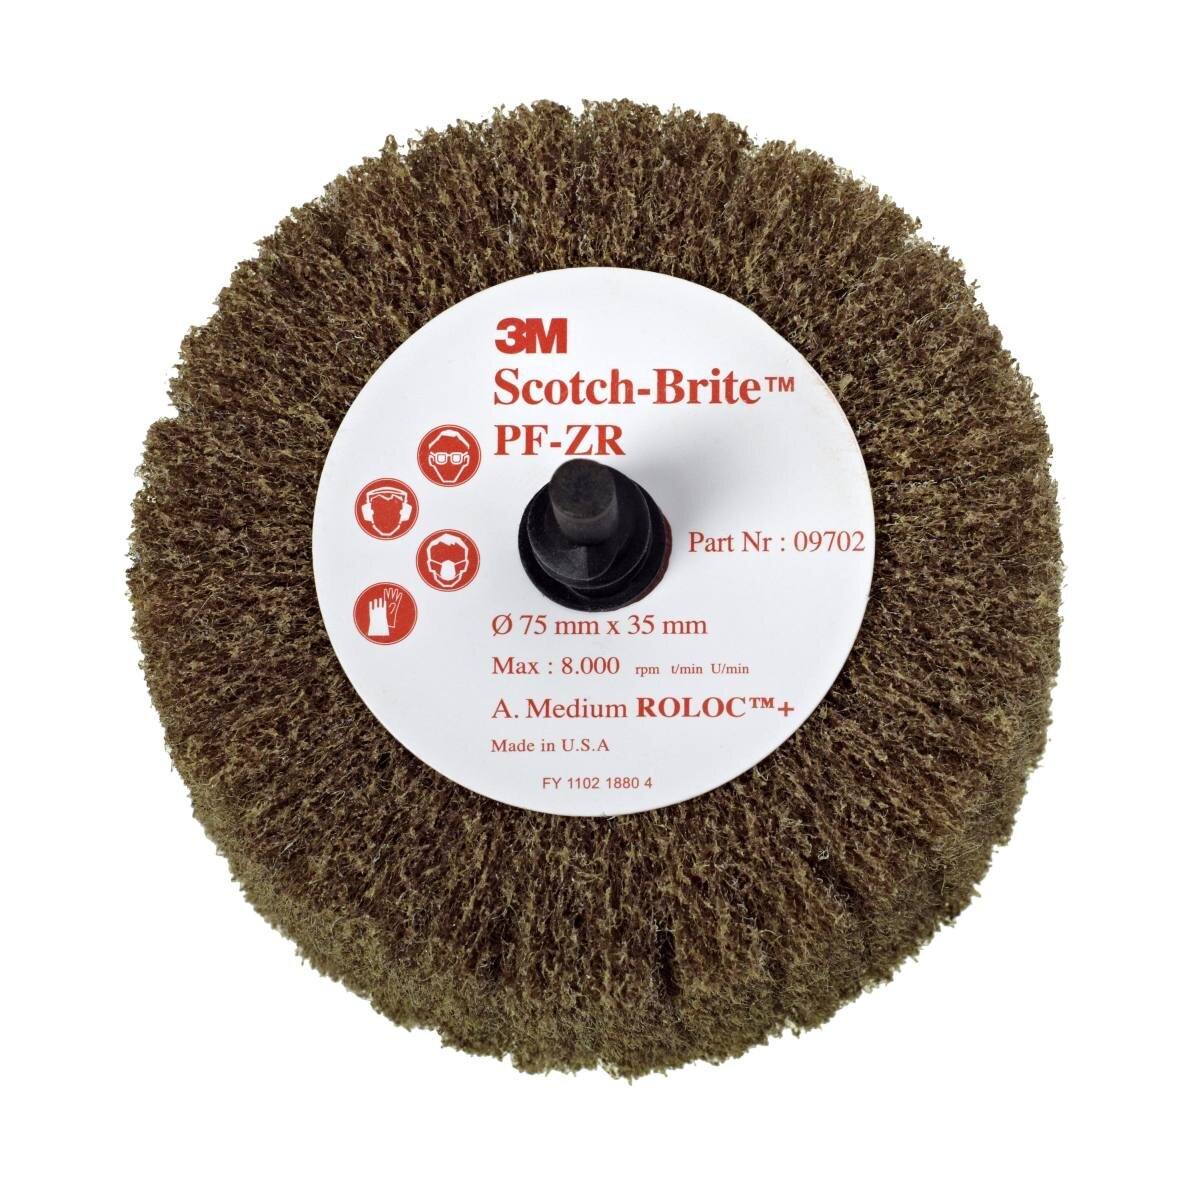 3M Scotch-Brite Roloc spazzola per alette PF-ZR, marrone, 76,2 mm, 35 mm, A, medio